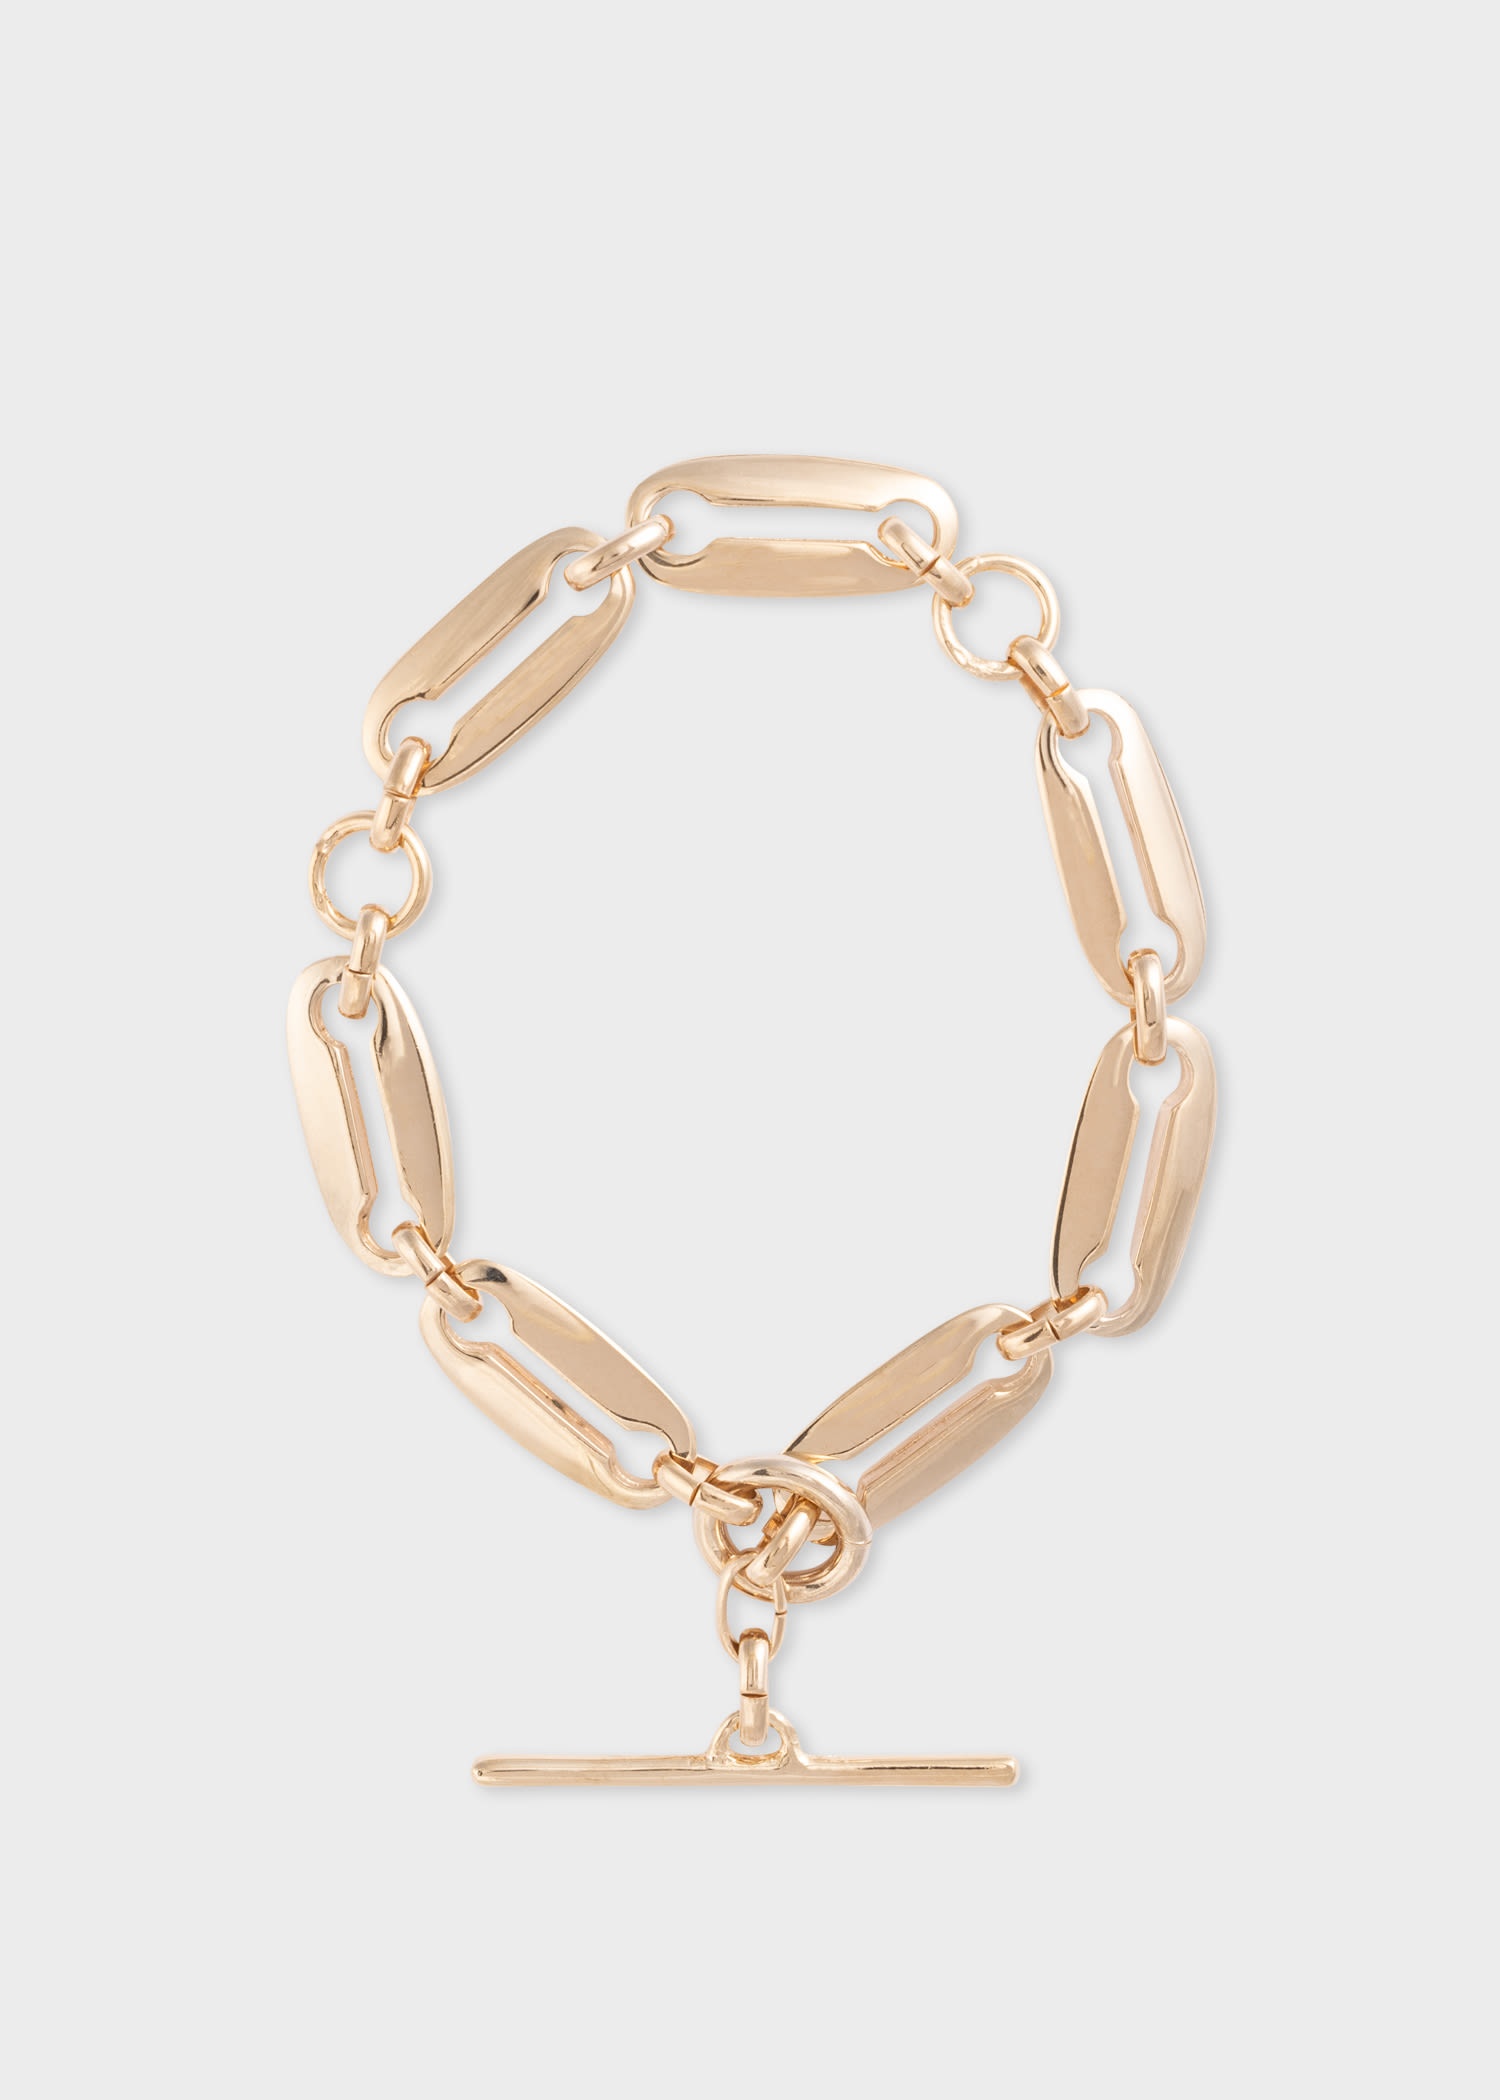 Oval Link Bracelet by Helena Rohner - 1